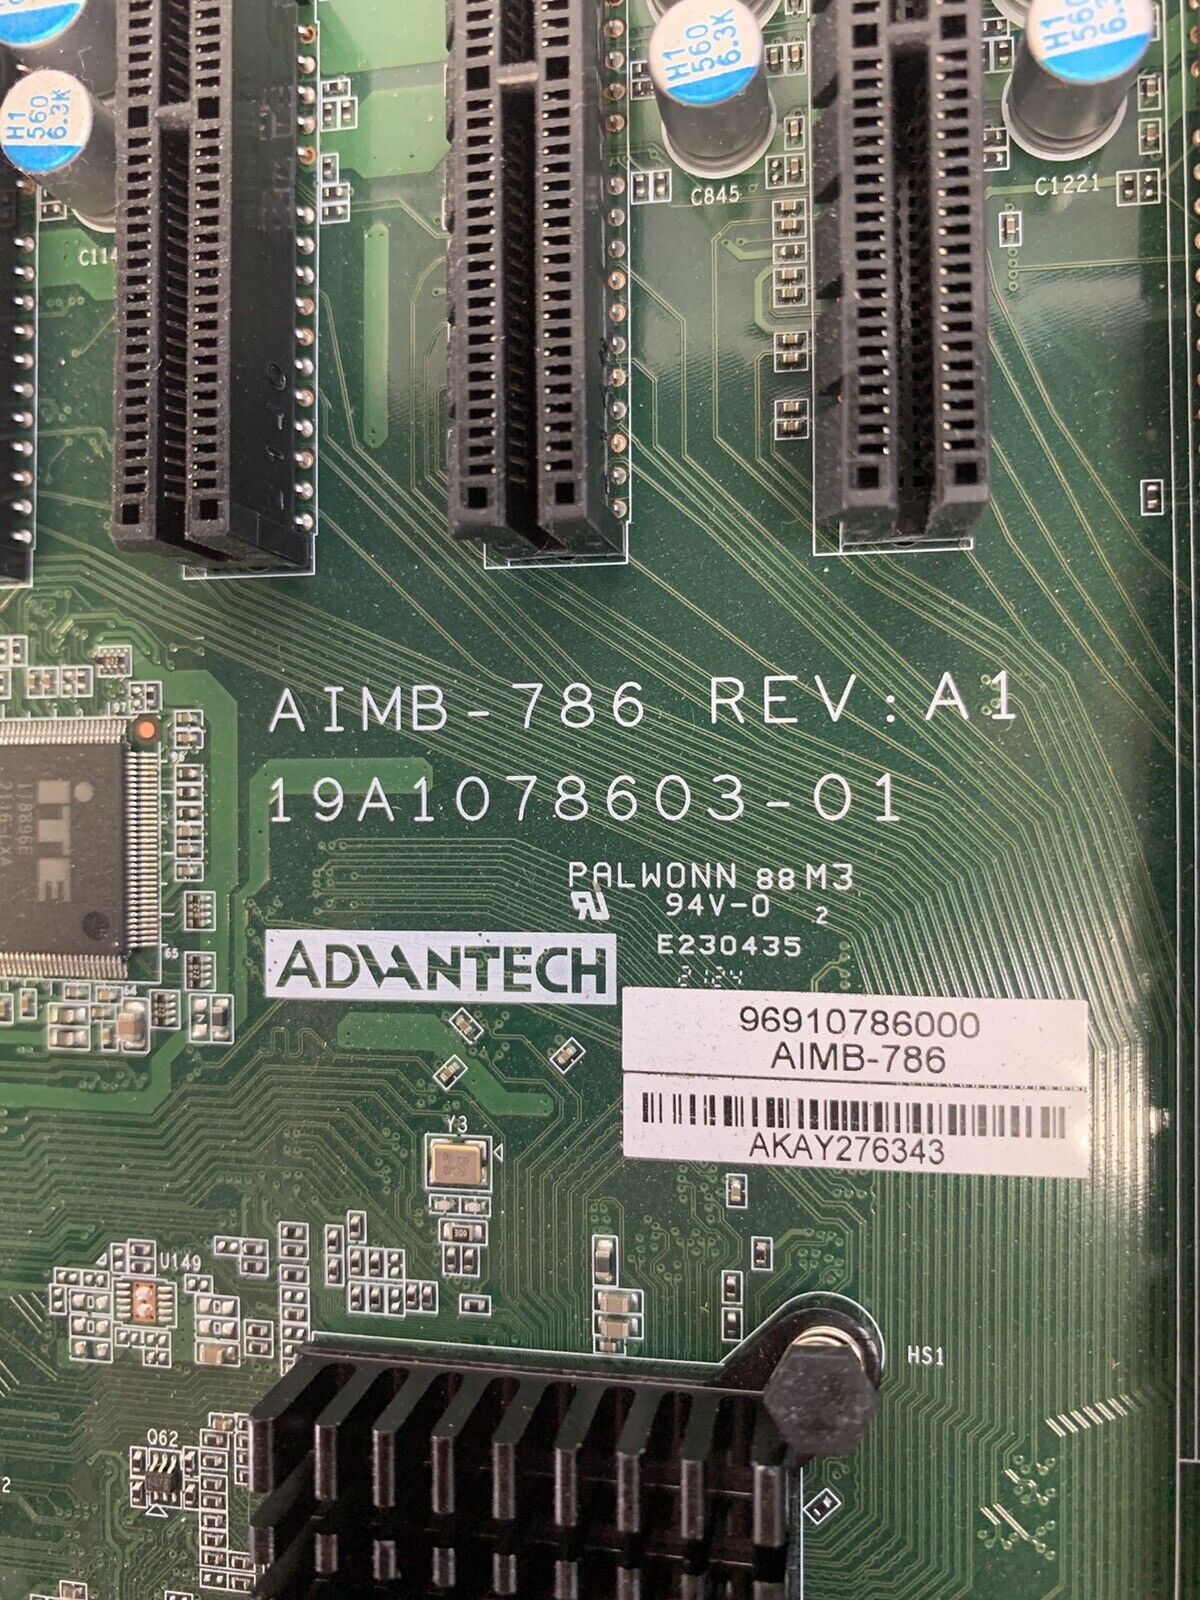 Advantec AIMD-786G2 Motherboard Intel Core i7-9700E 2.6GHz 8GB RAM w/Shield